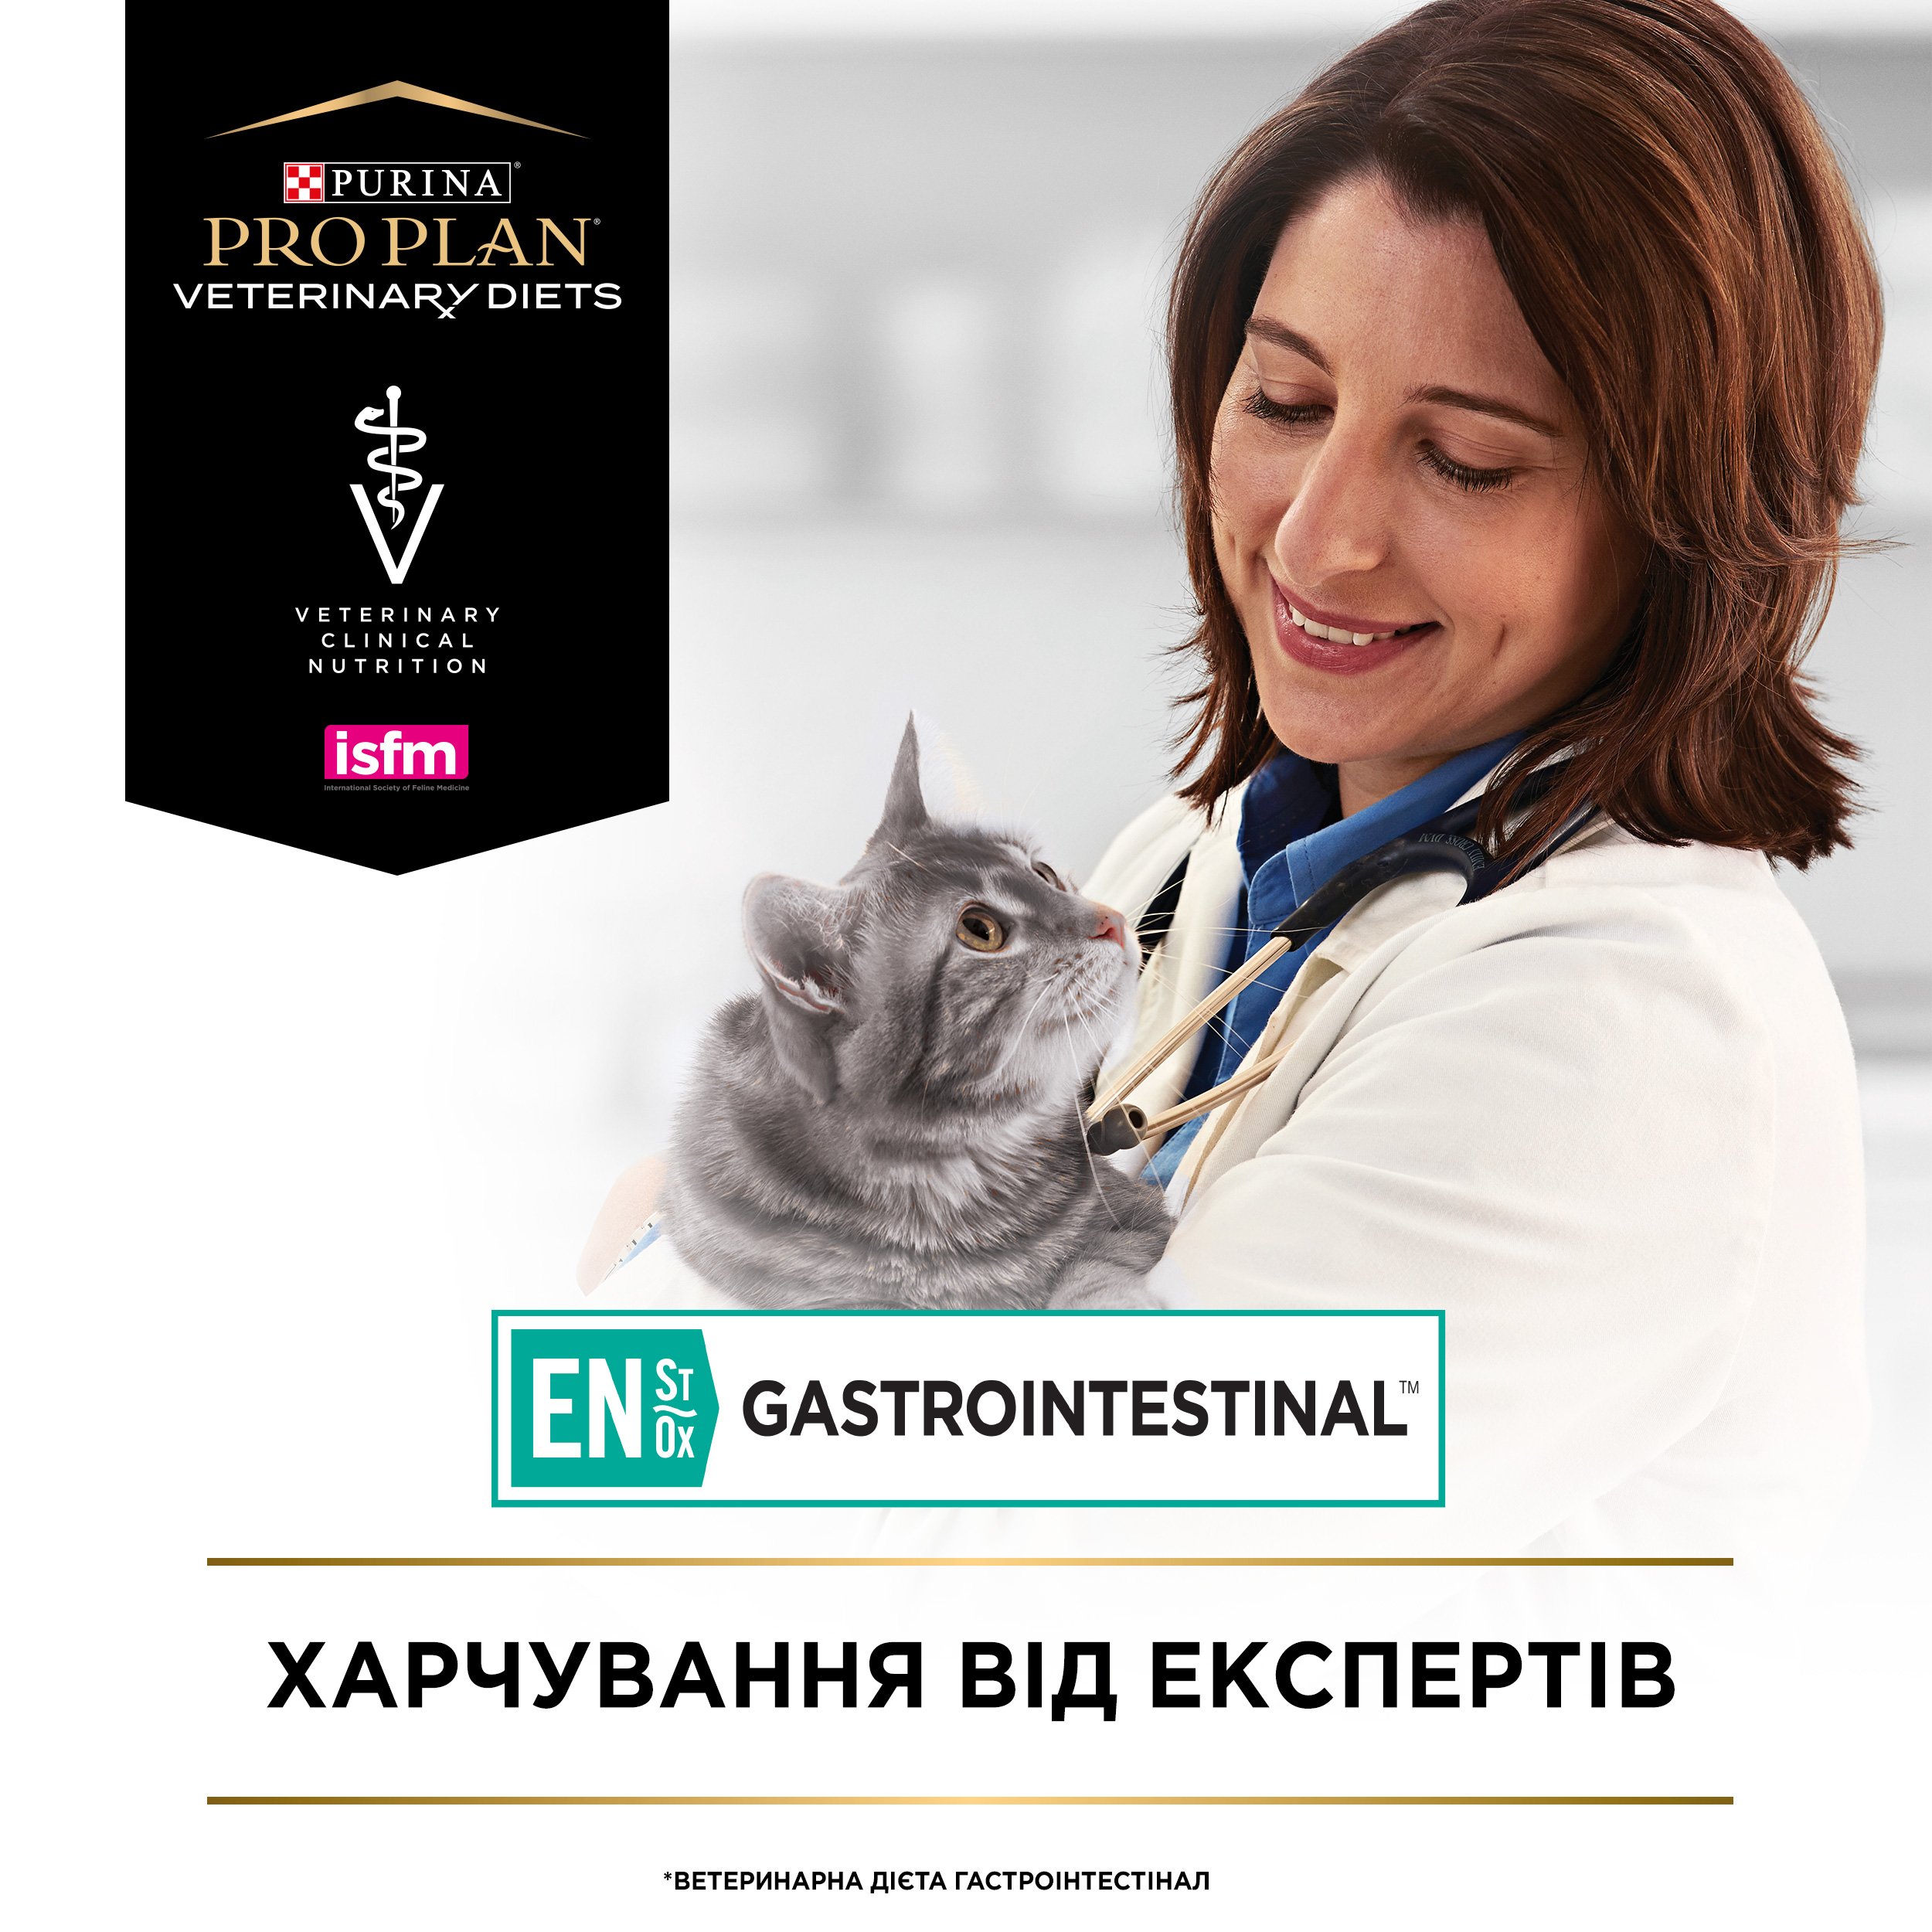 Сухой корм для кошек при заболеваниях желудочно-кишечного тракта Purina Pro Plan Veterinary Diets EN Gastrointestinal, 5 кг - фото 8